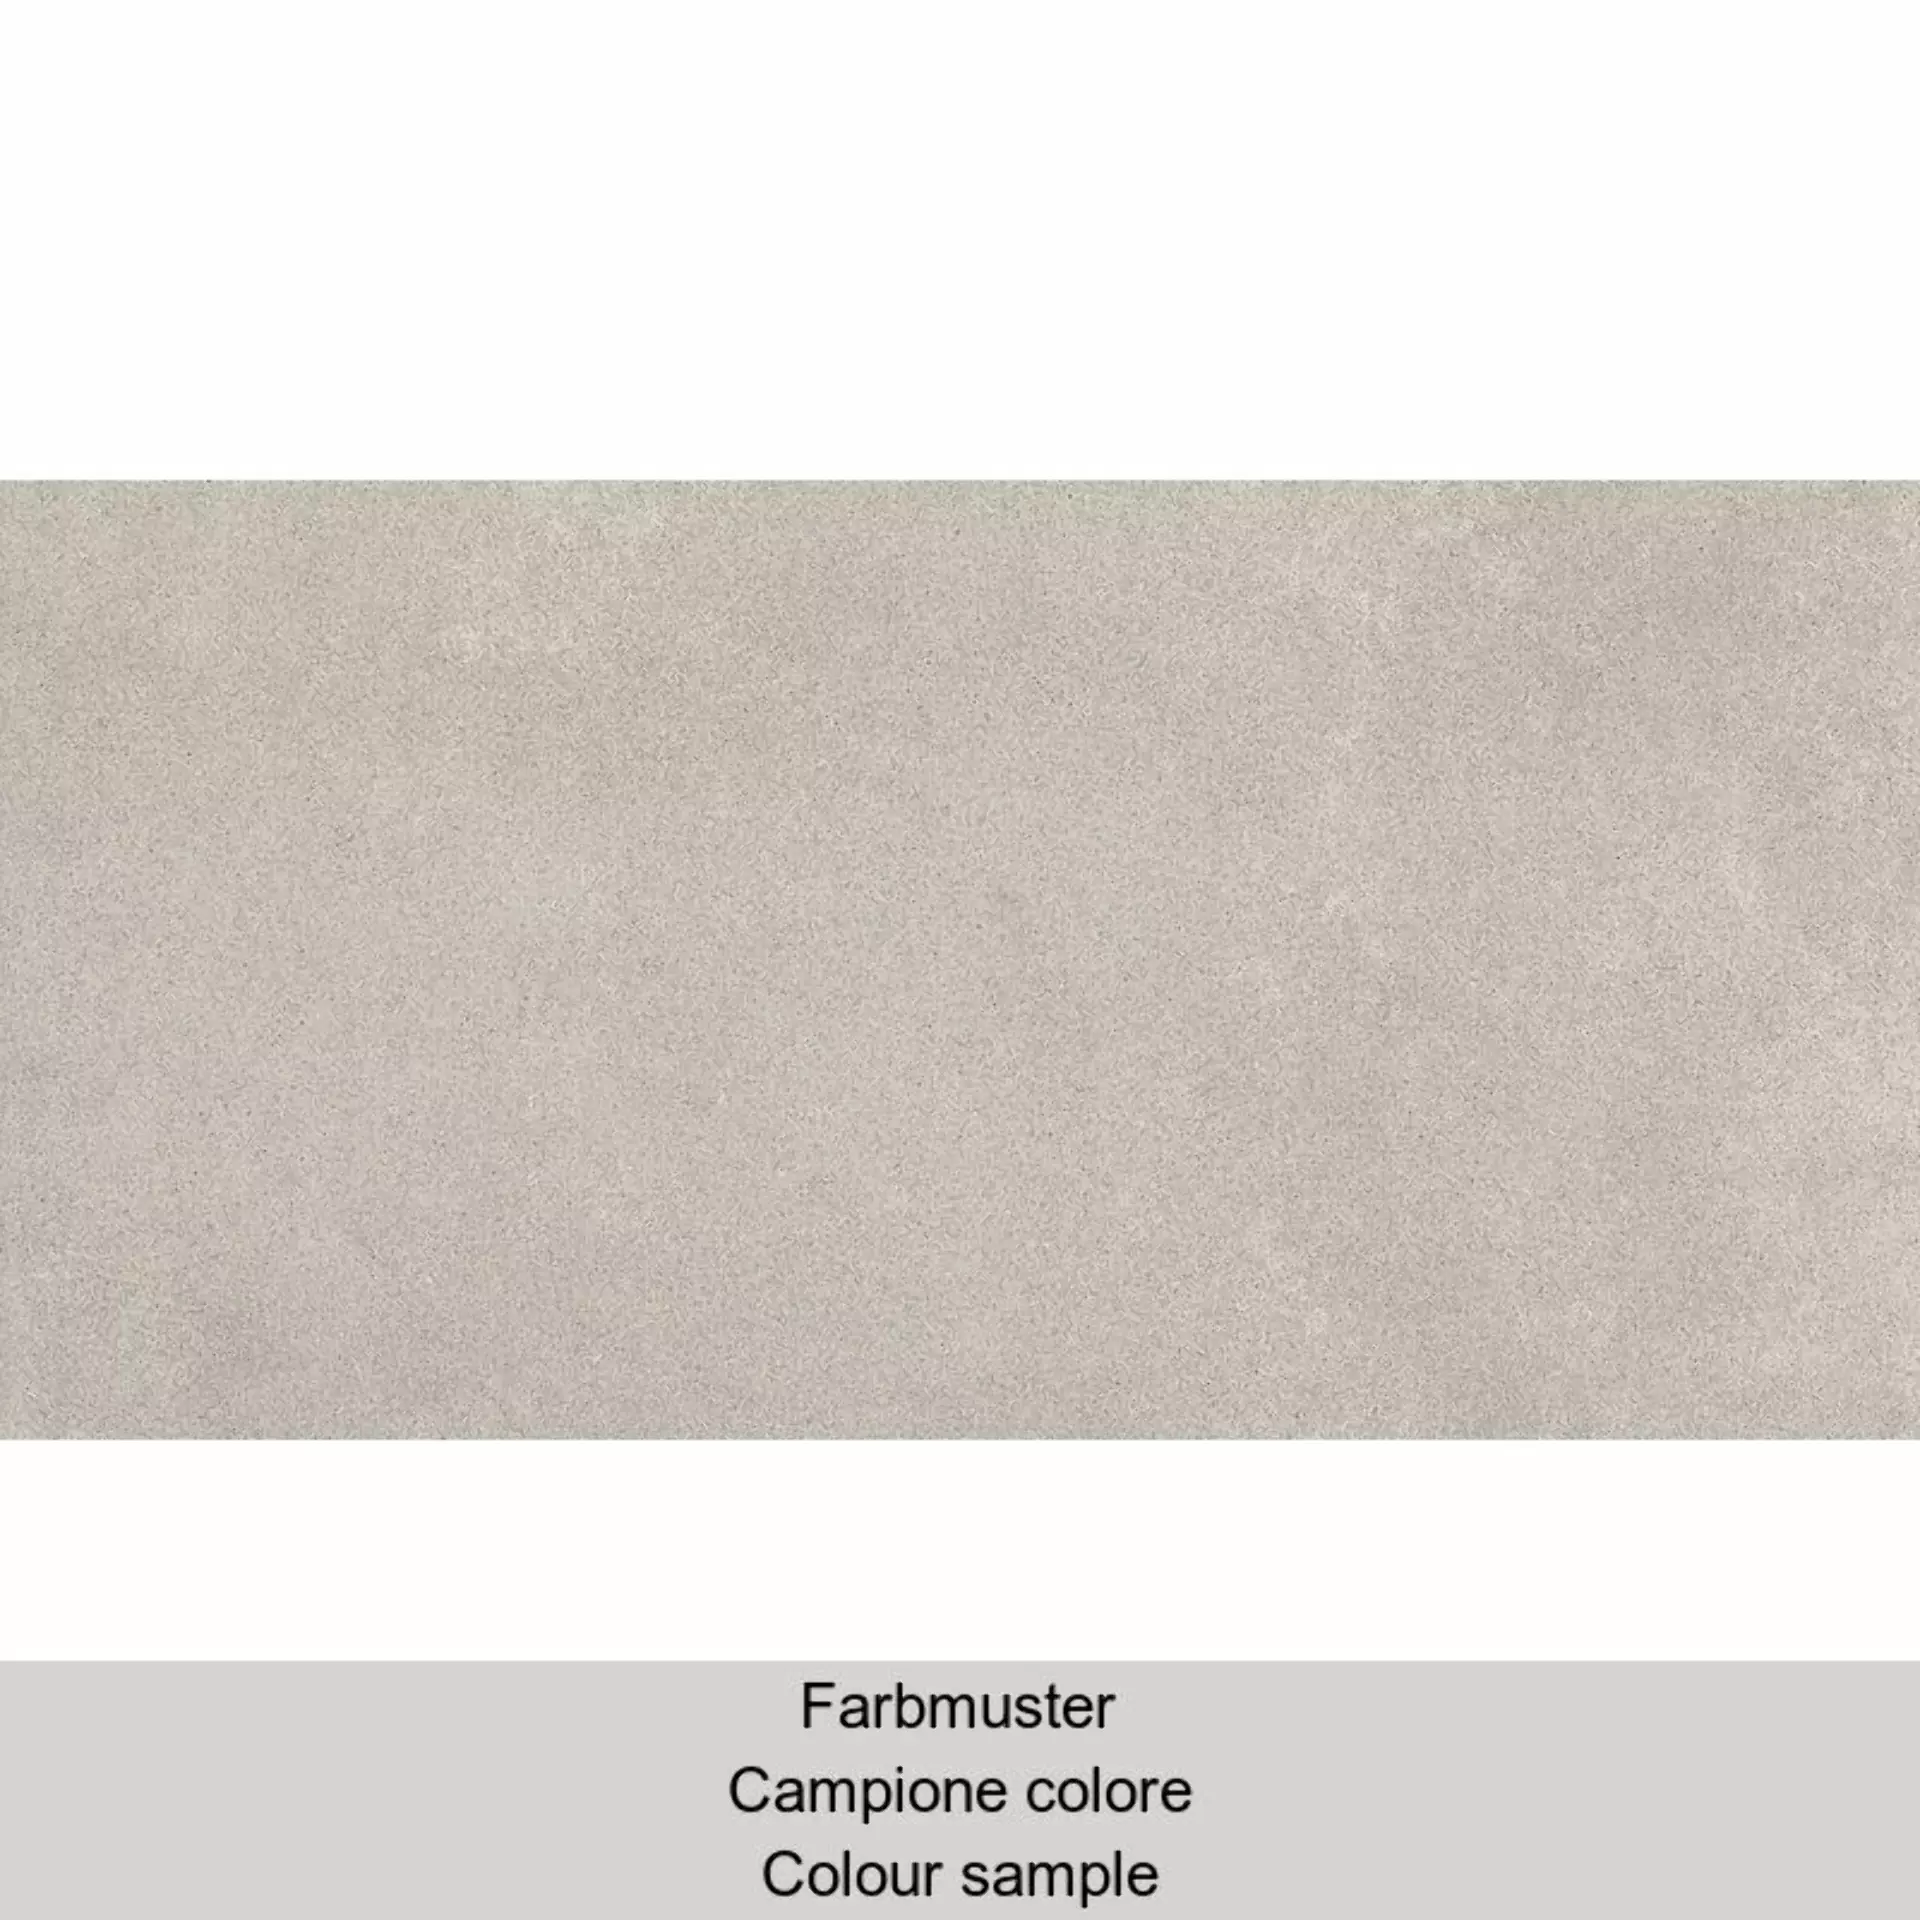 Casalgrande Pietre Etrusche Paestum Naturale – Matt – Selfcleaning 7792287 30x60cm rectified 9mm